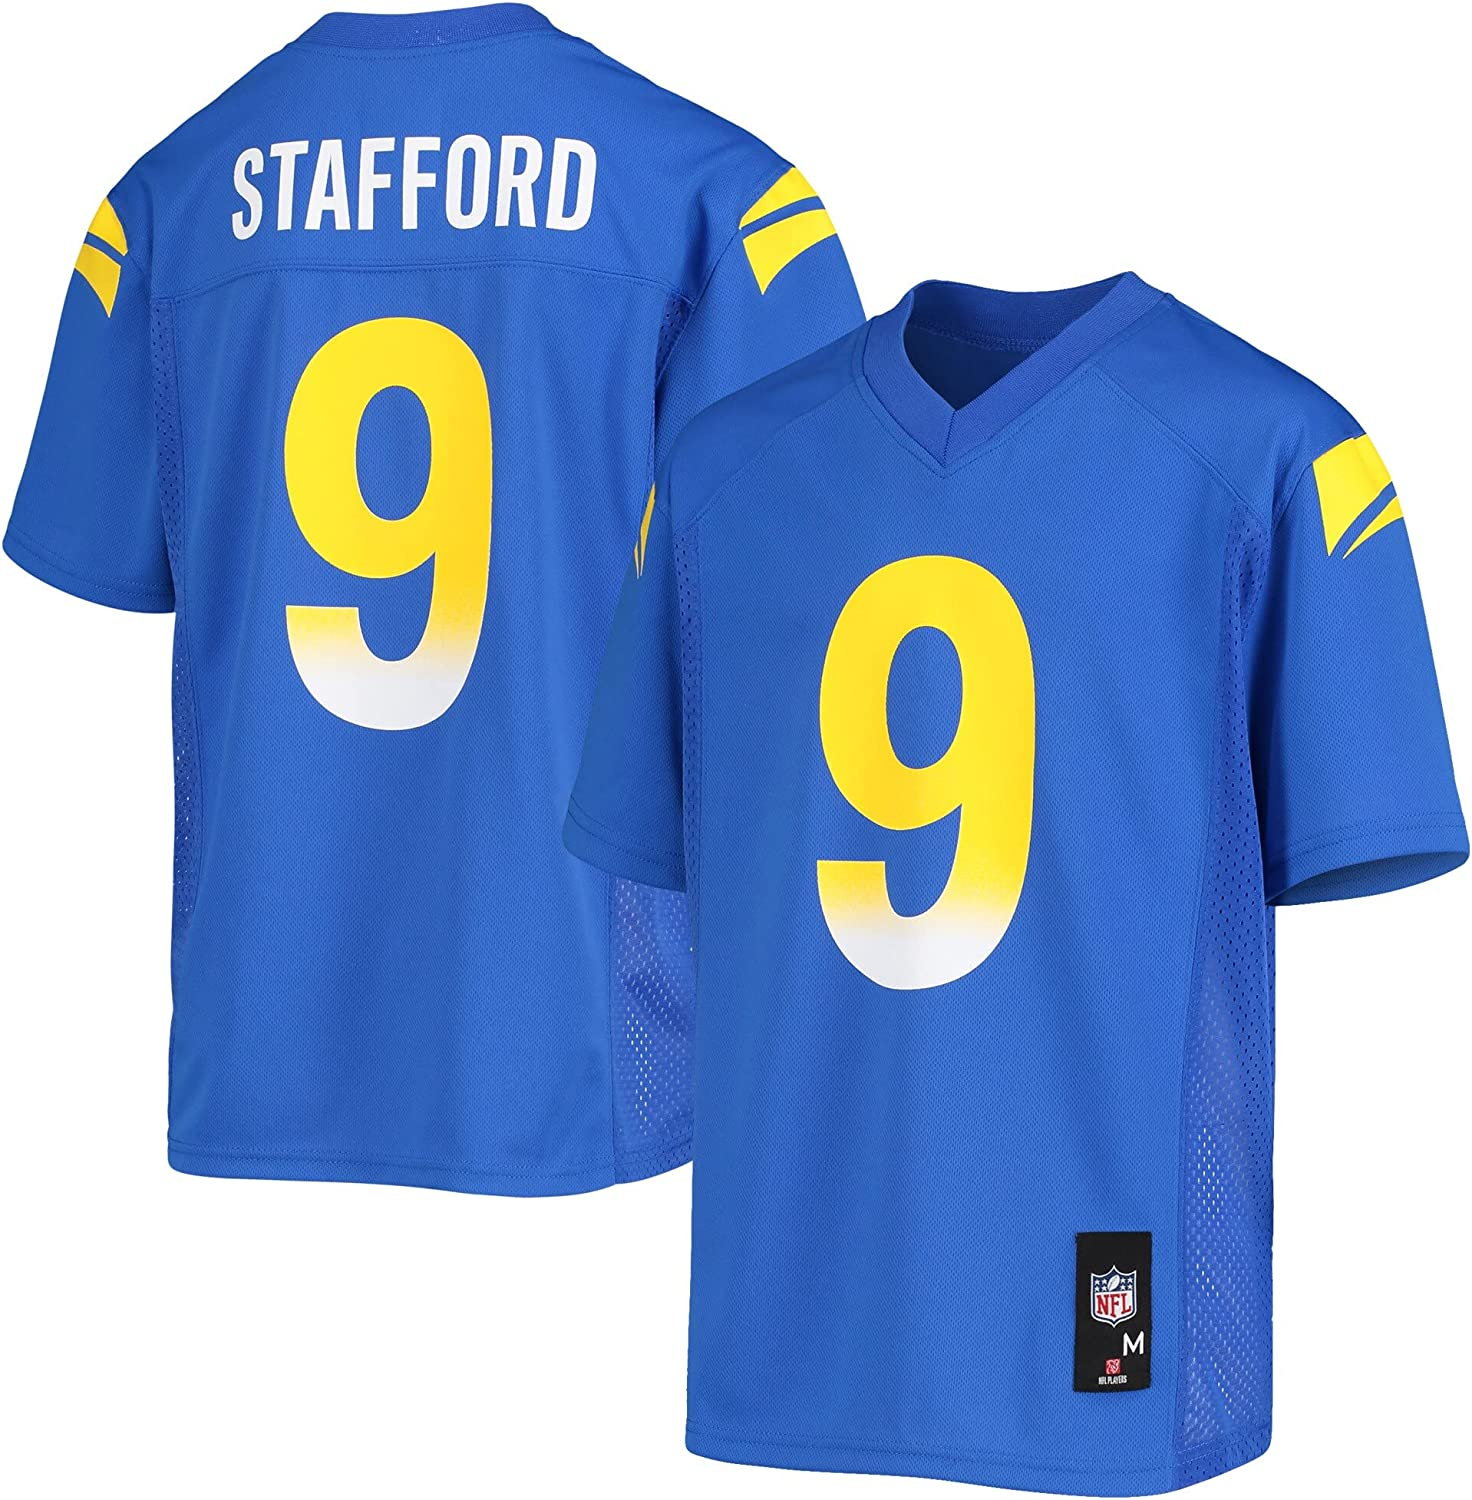 NFL Los Angeles Rams Boys' Short Sleeve Stafford Jersey - XS